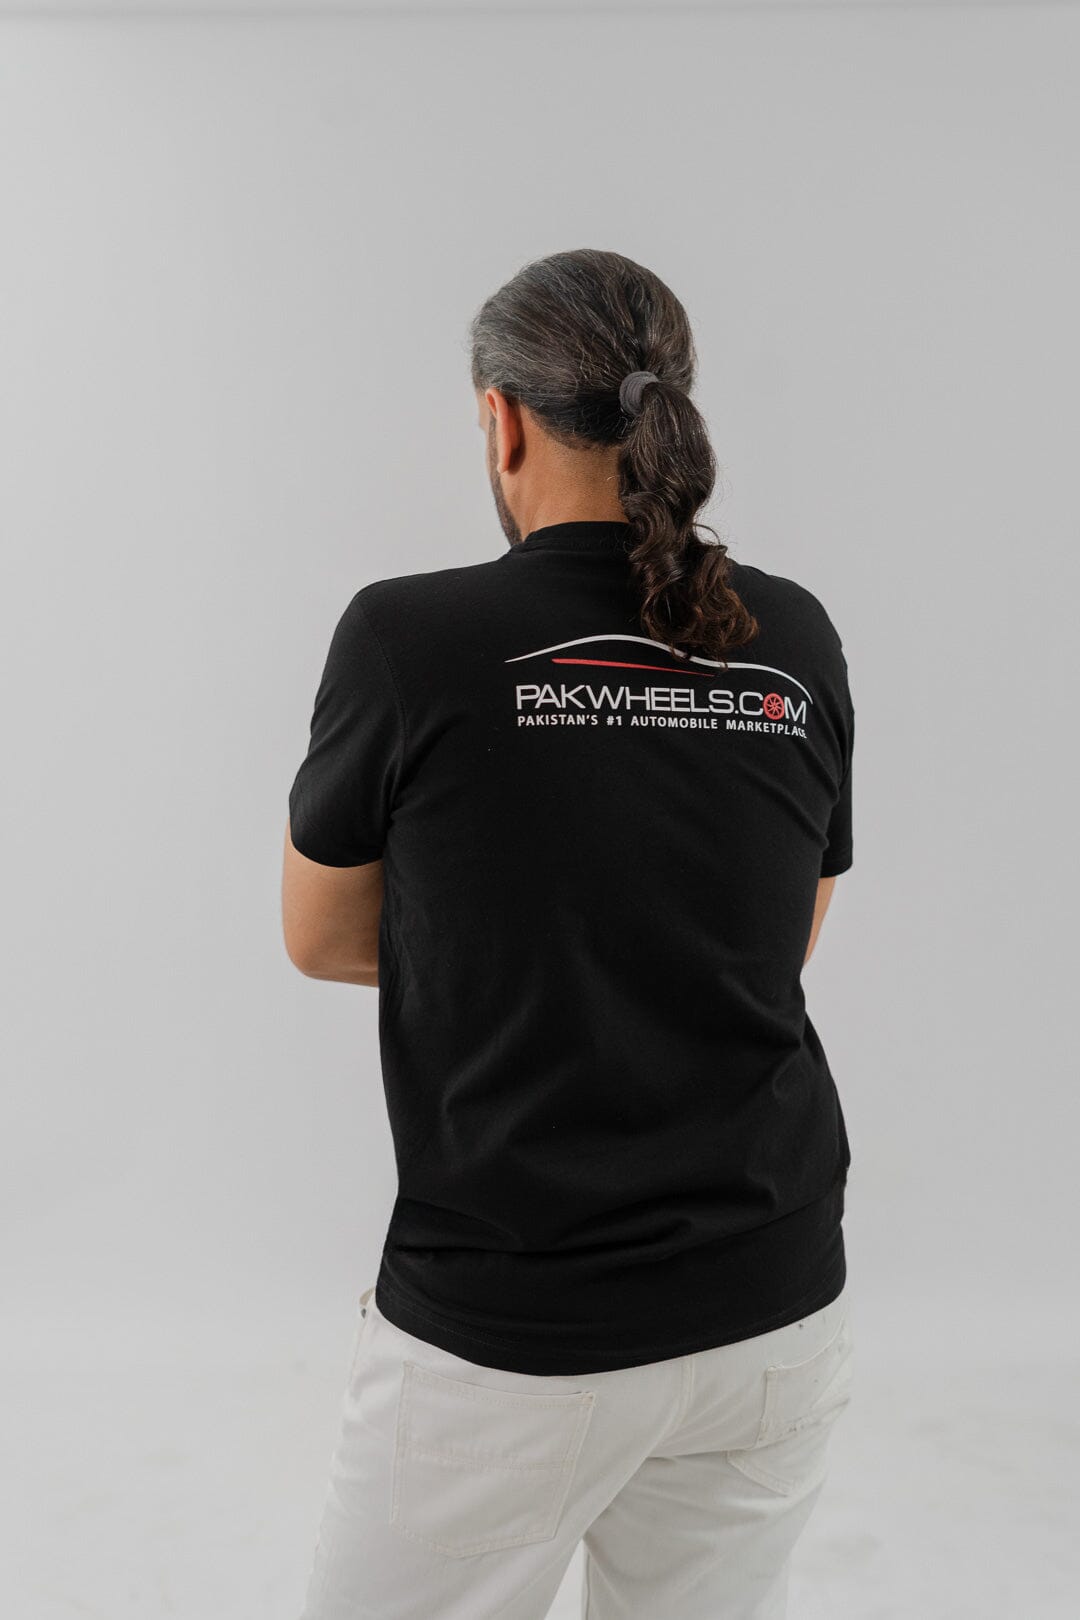 Polo Republica Men's PakWheels BMW Printed Crew Neck Tee Shirt